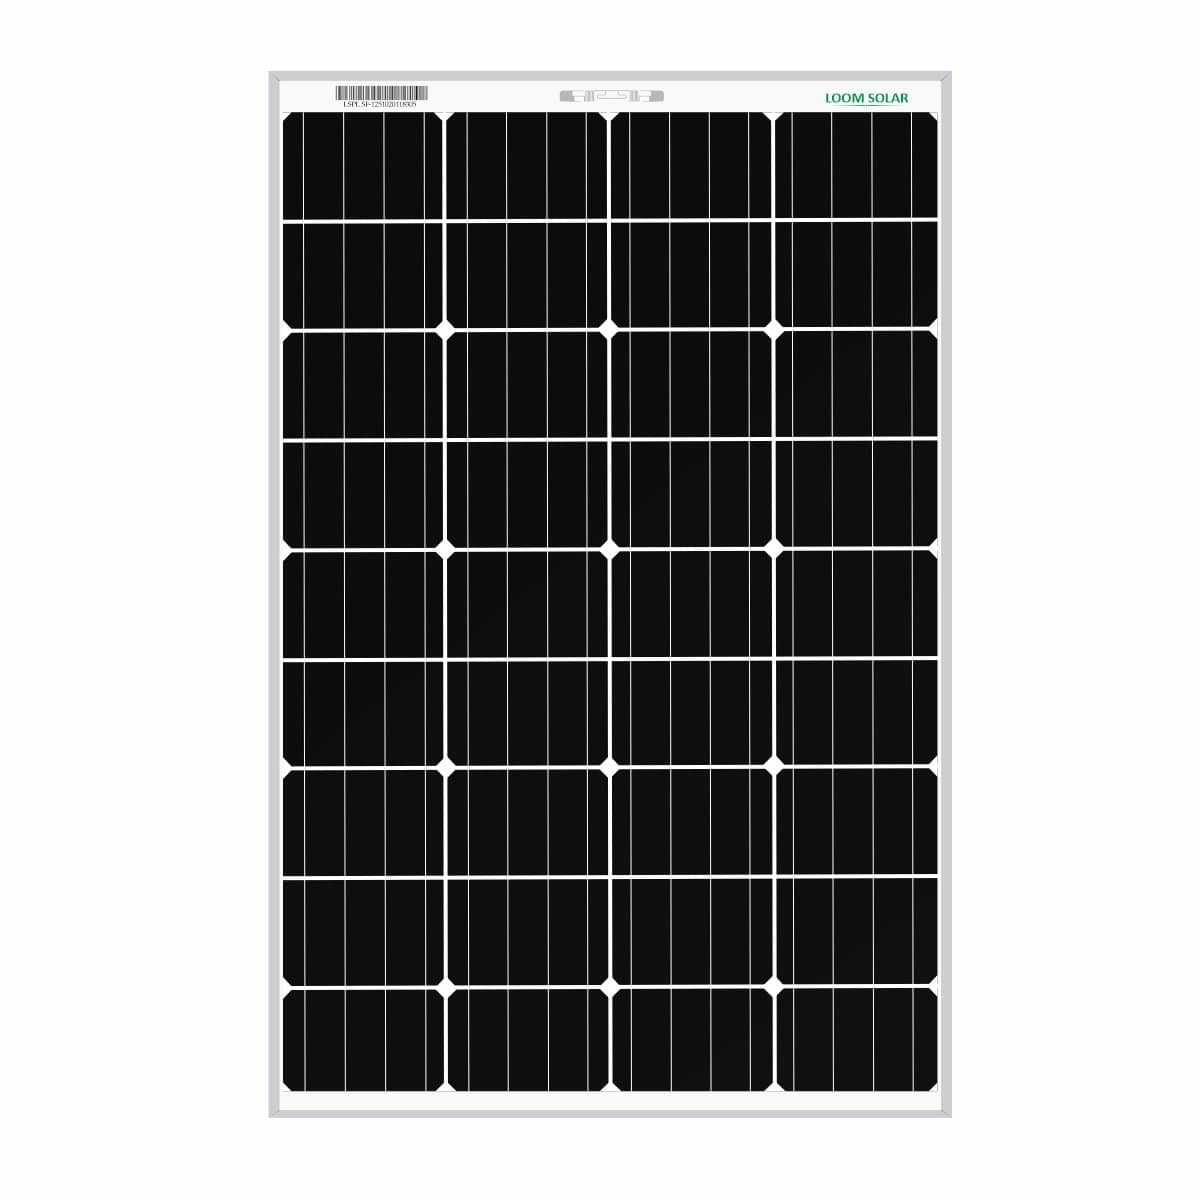 Loom Solar 55 watt - 12 volt Mono Crystalline Panel for DC Appliances